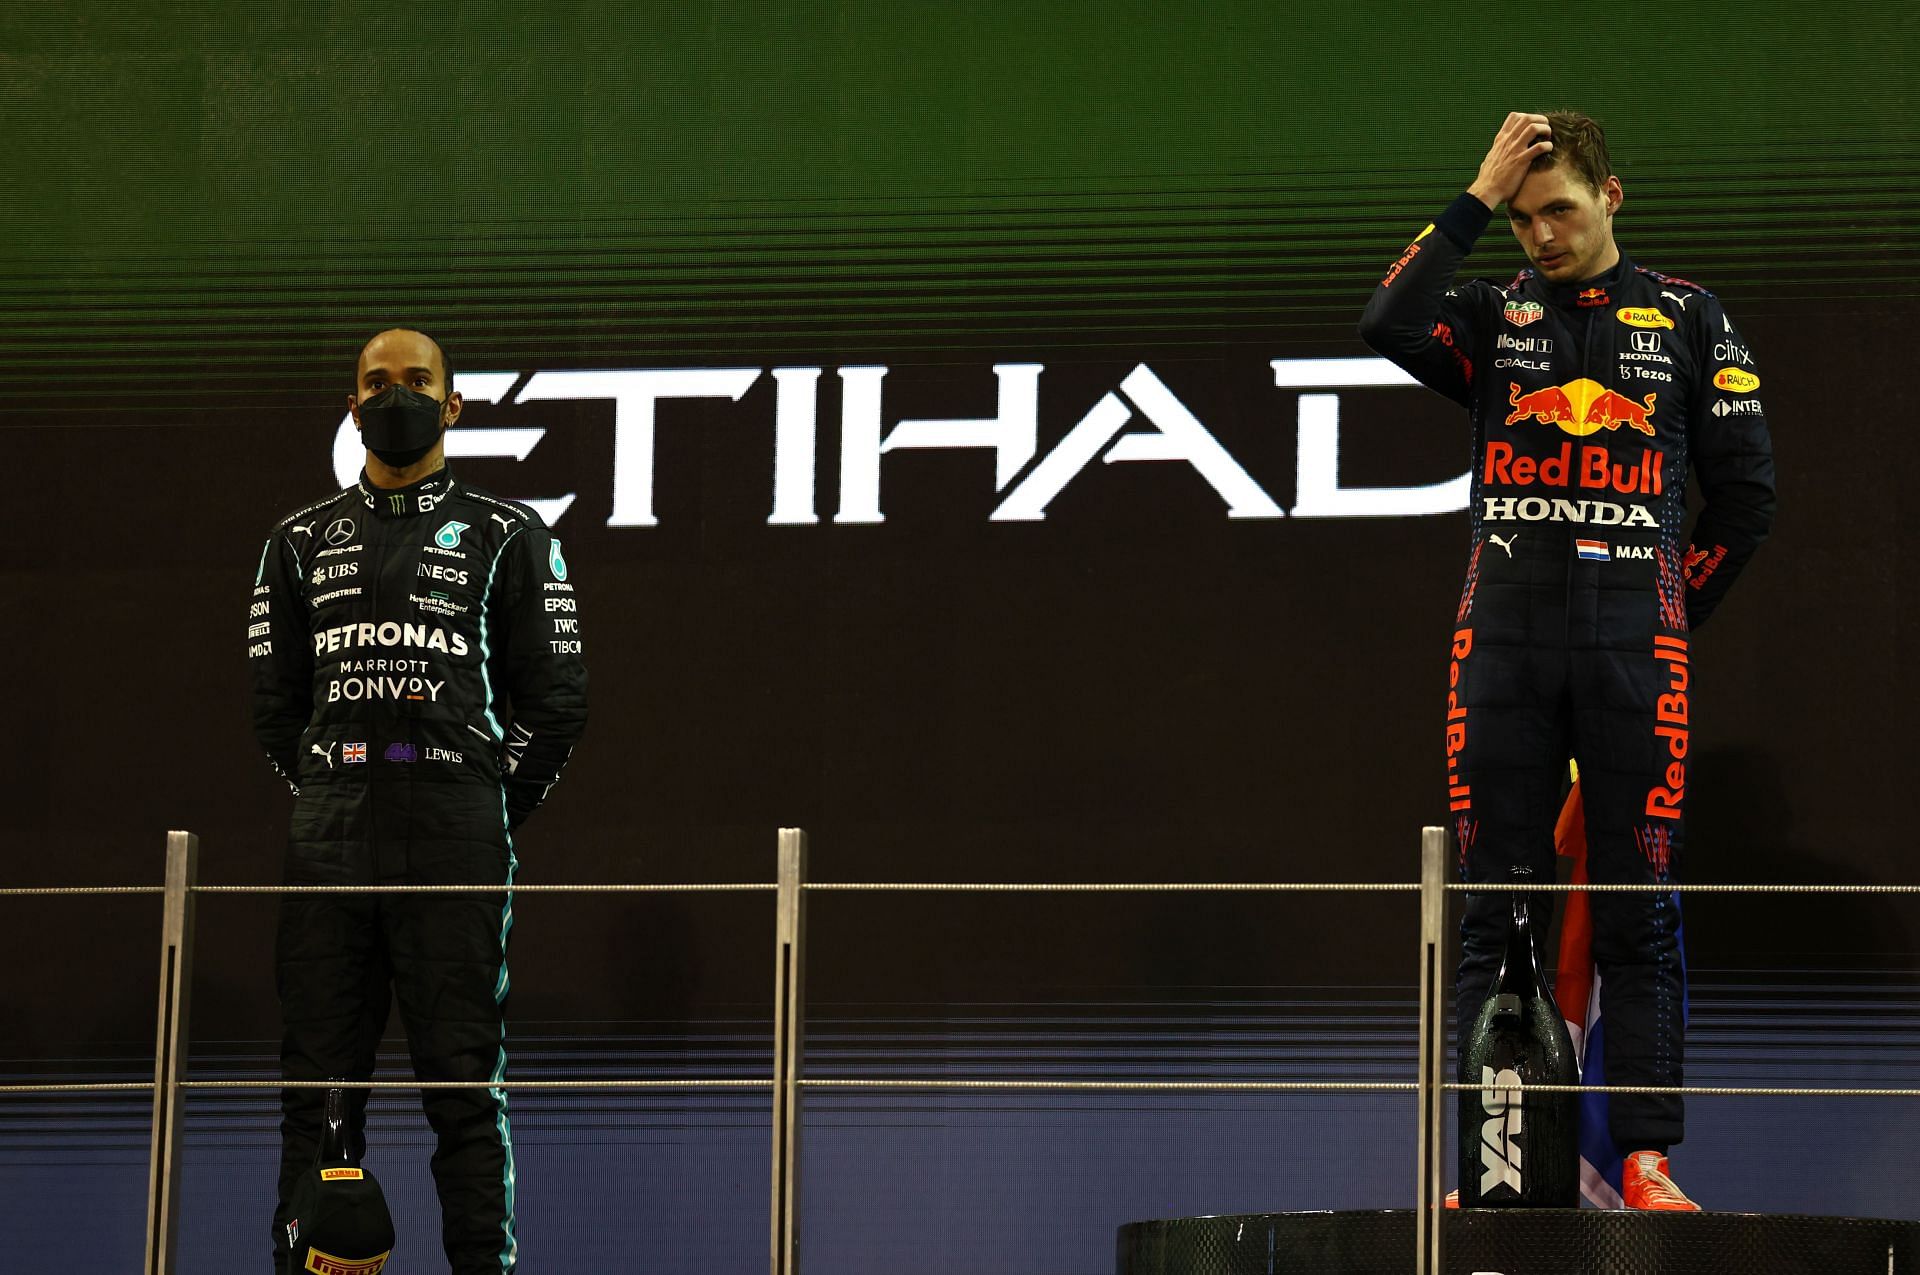 Abu Dhabi Grand Prix - Max Verstappen (R) and Lewis Hamilton